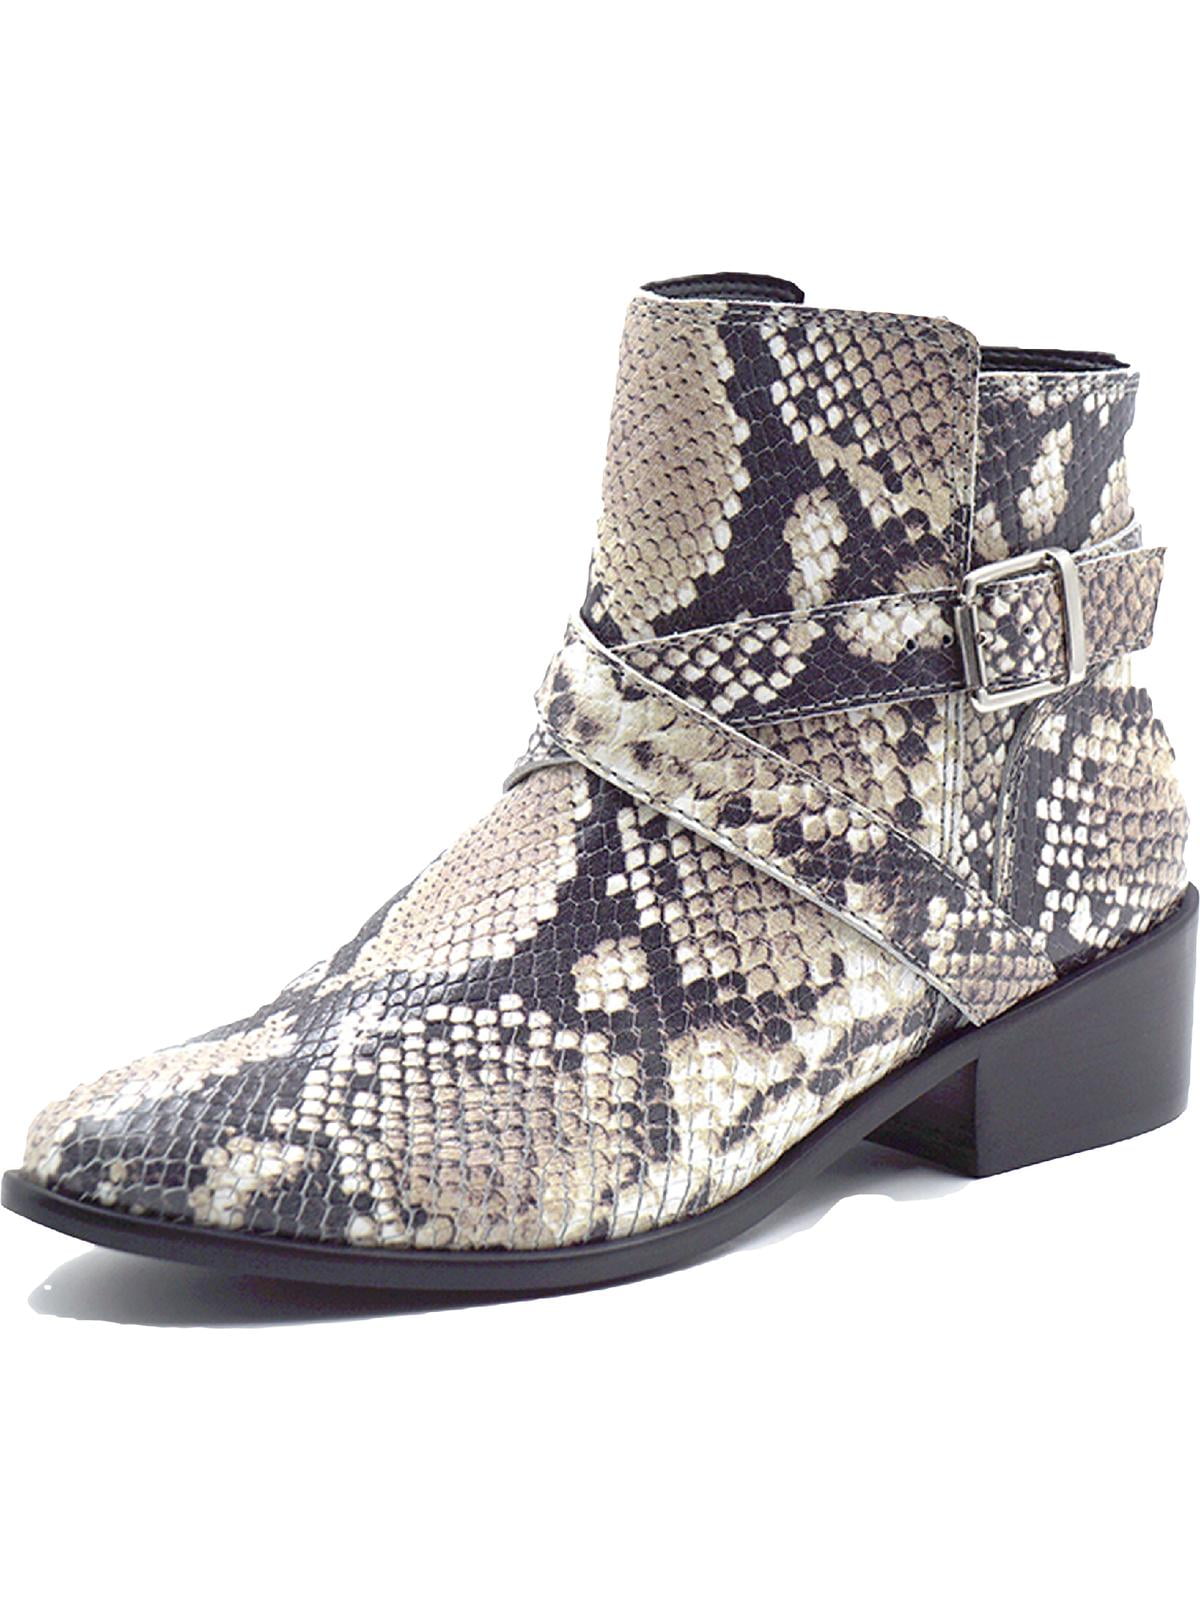 KAANAS Womens Albarola Leather Almond Toe Ankle Boots - Walmart.com